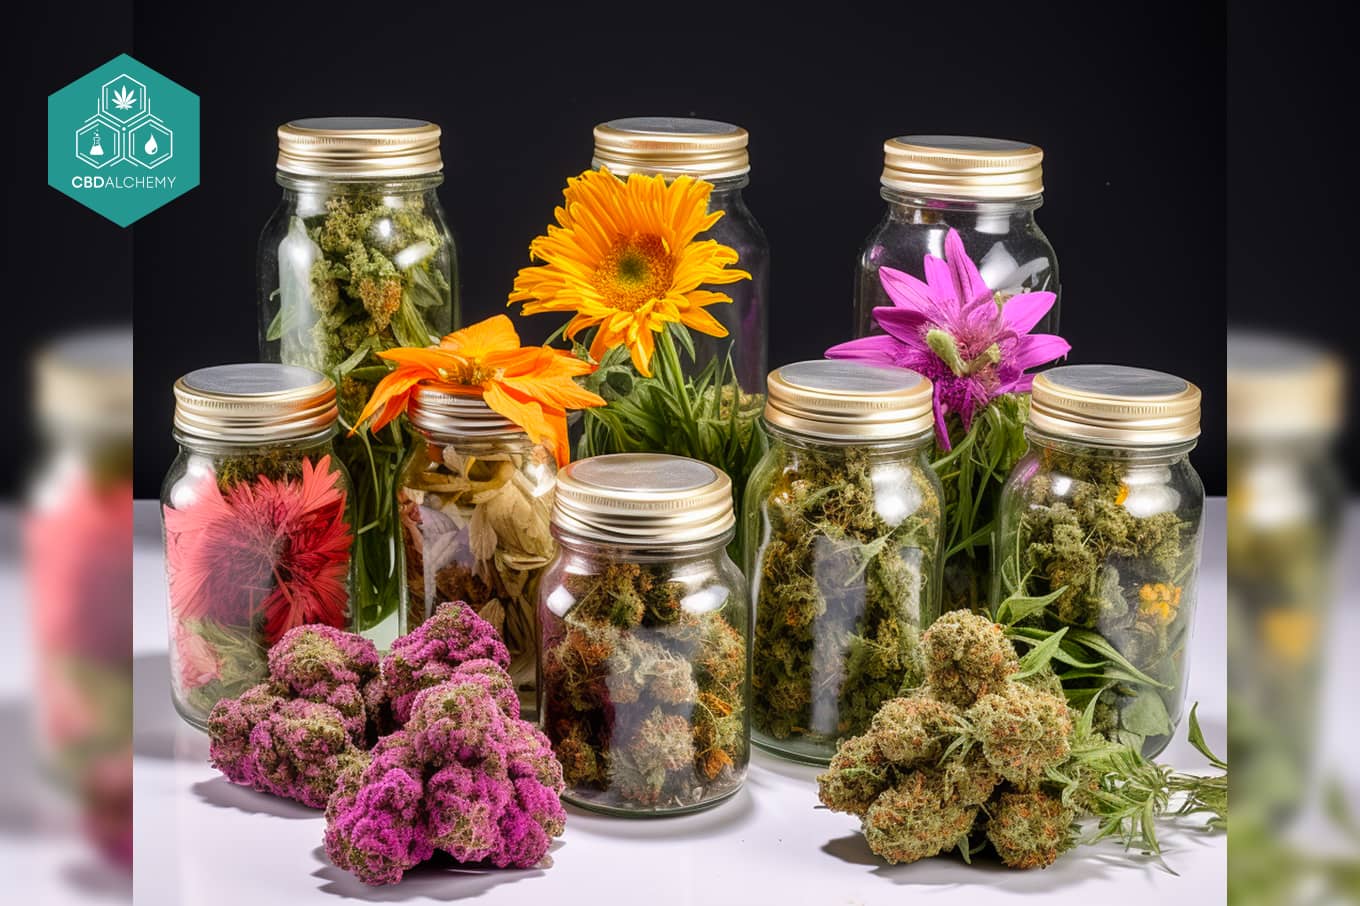 Marijuana names: Explore CBD-rich strains like Sweet Pure CBD.